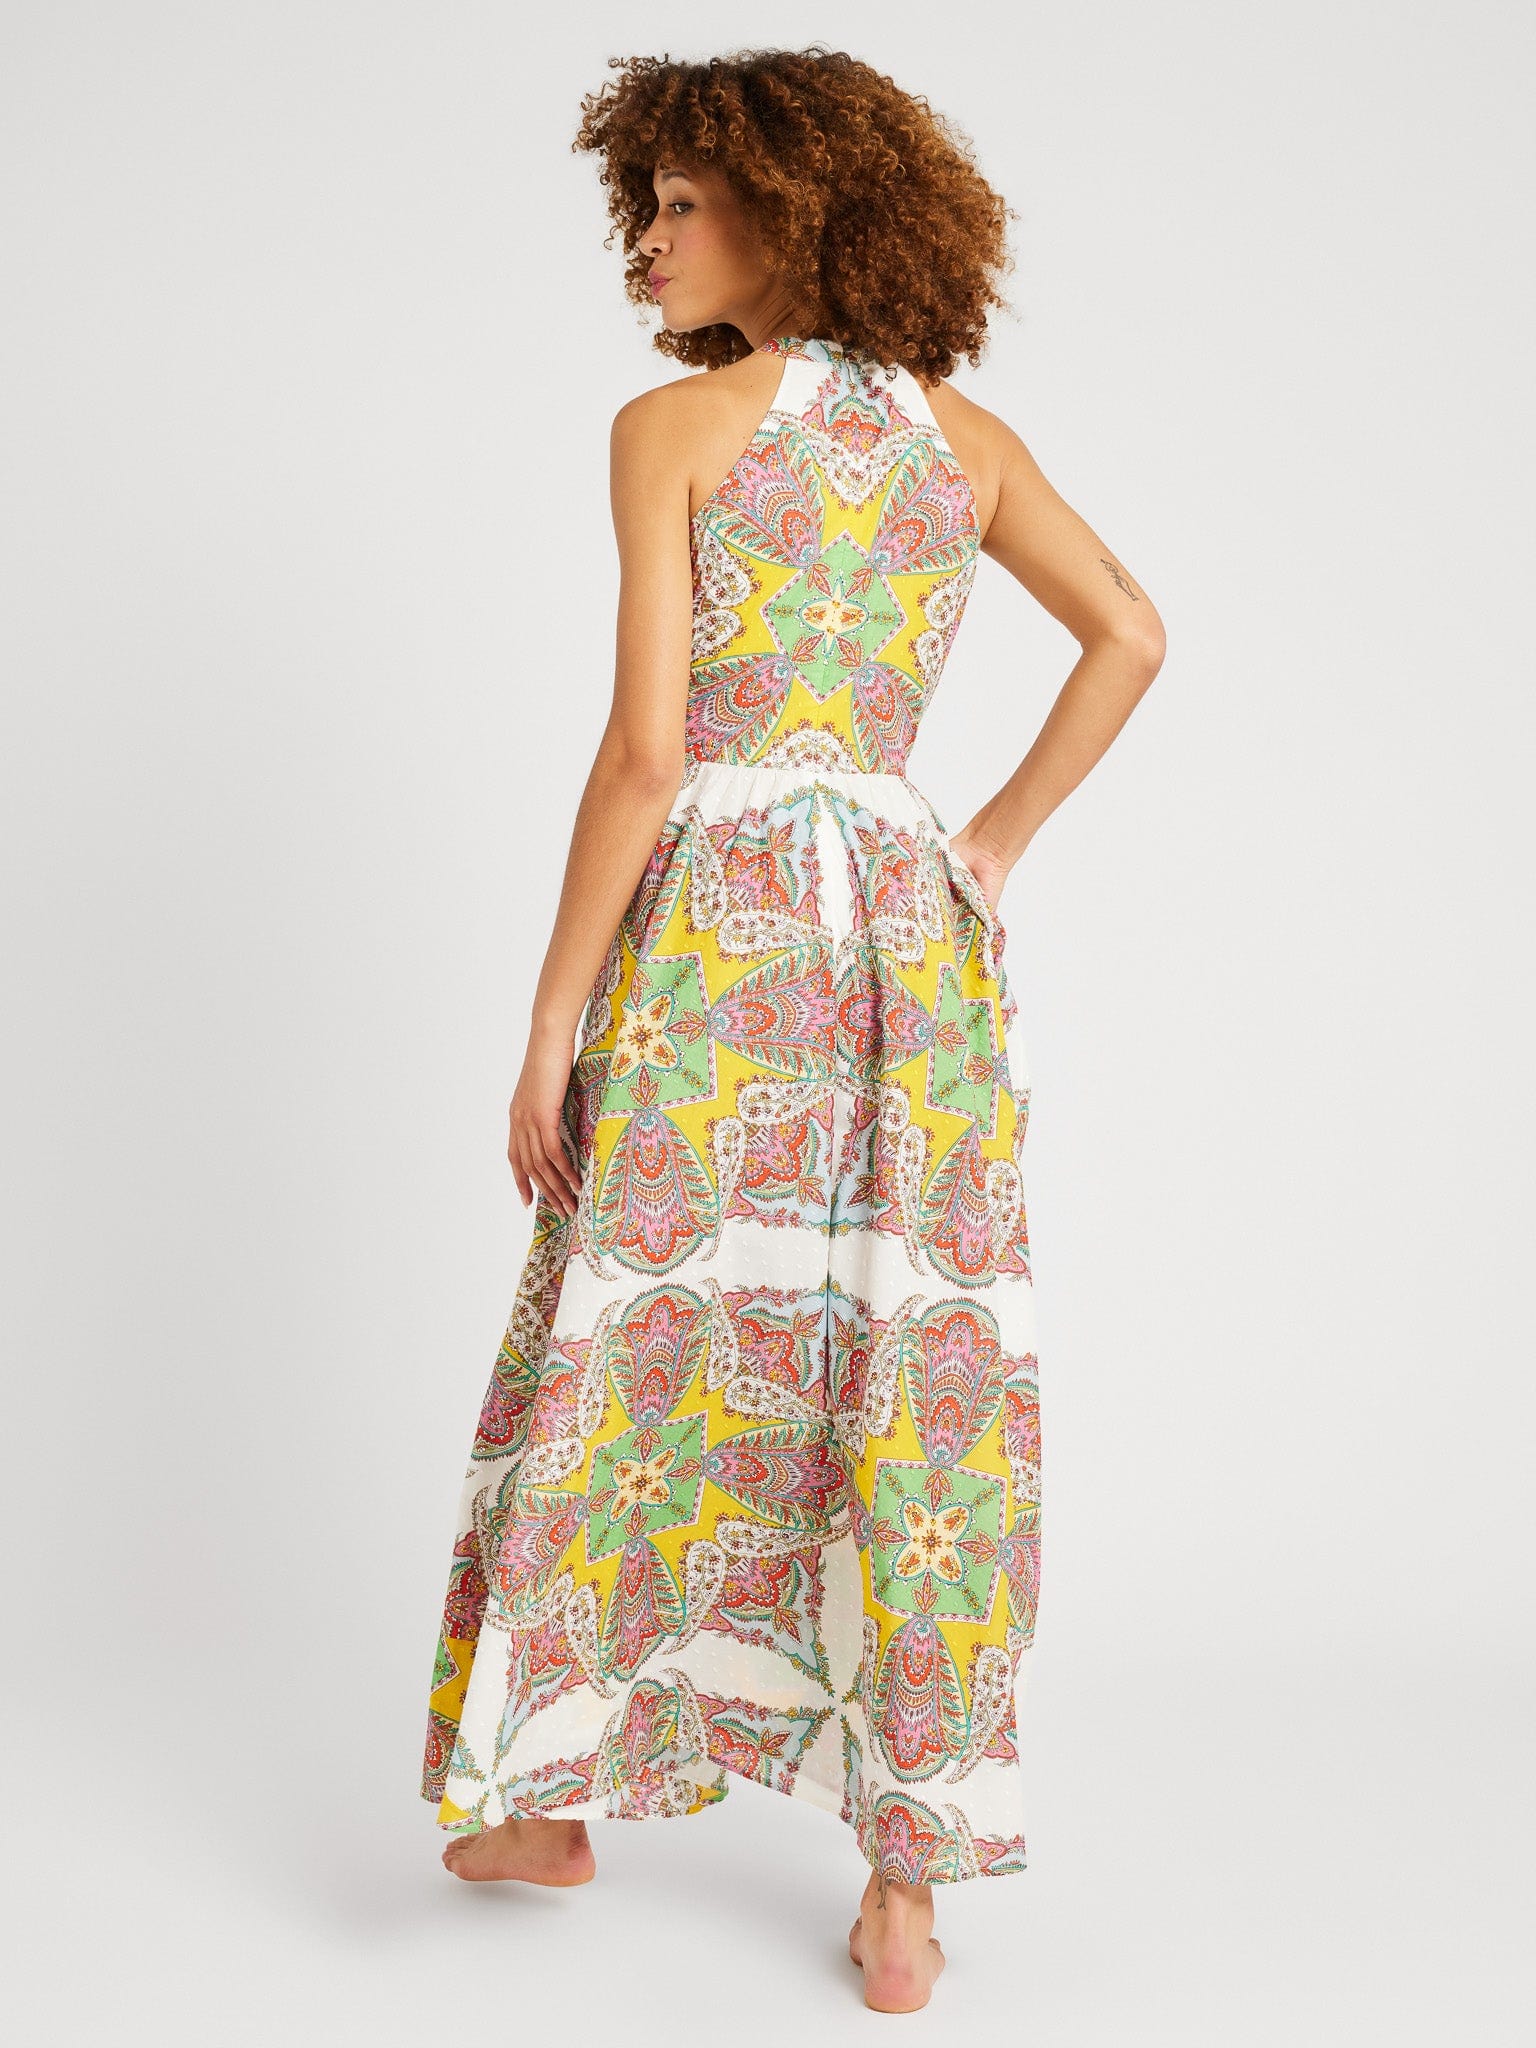 MILLE Clothing Capri Dress in Kaleidoscope